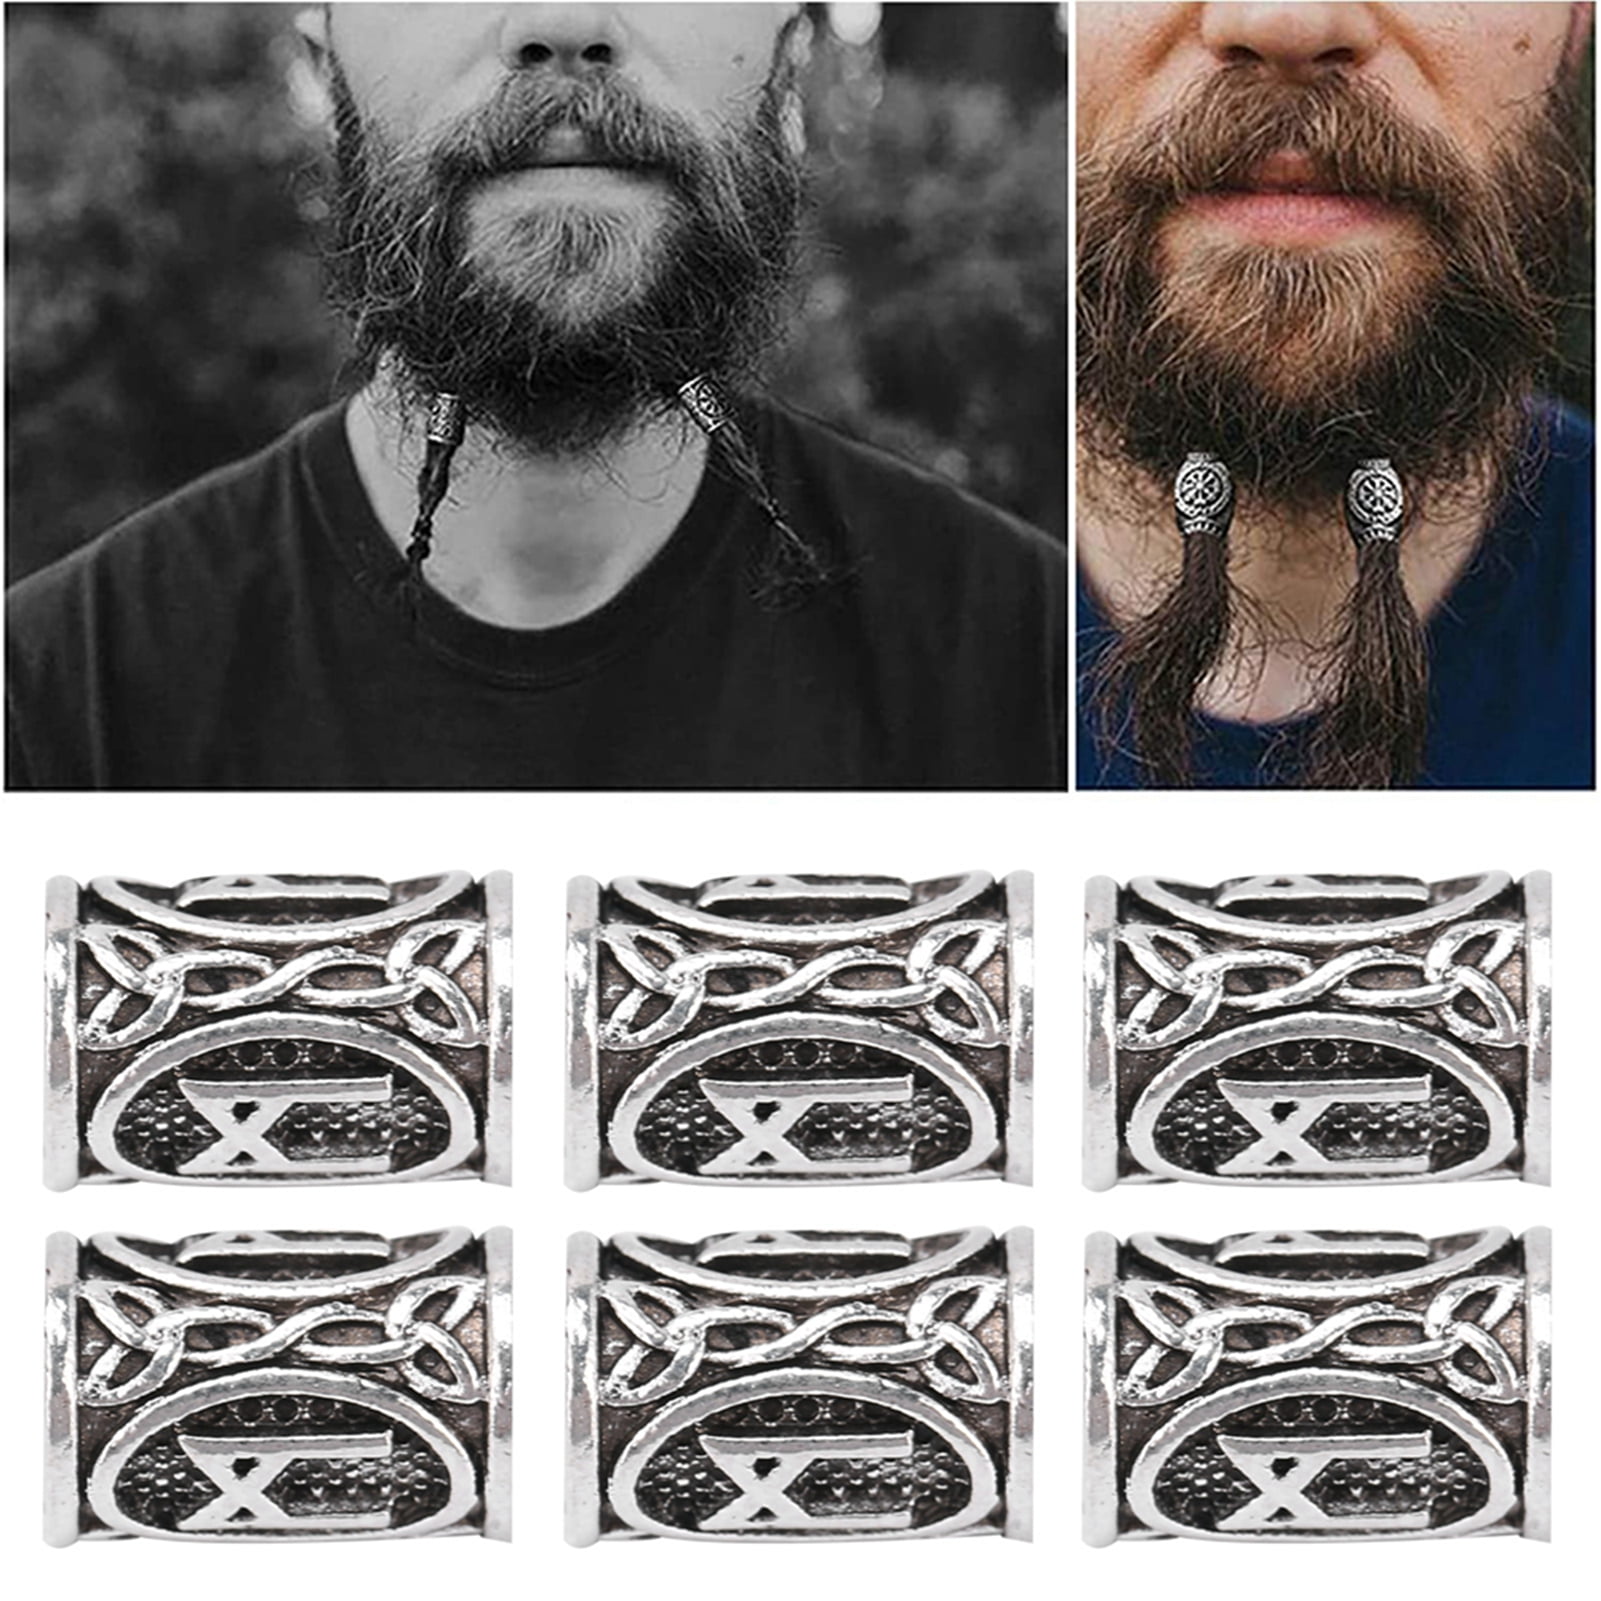 Beard beads! : r/Viking